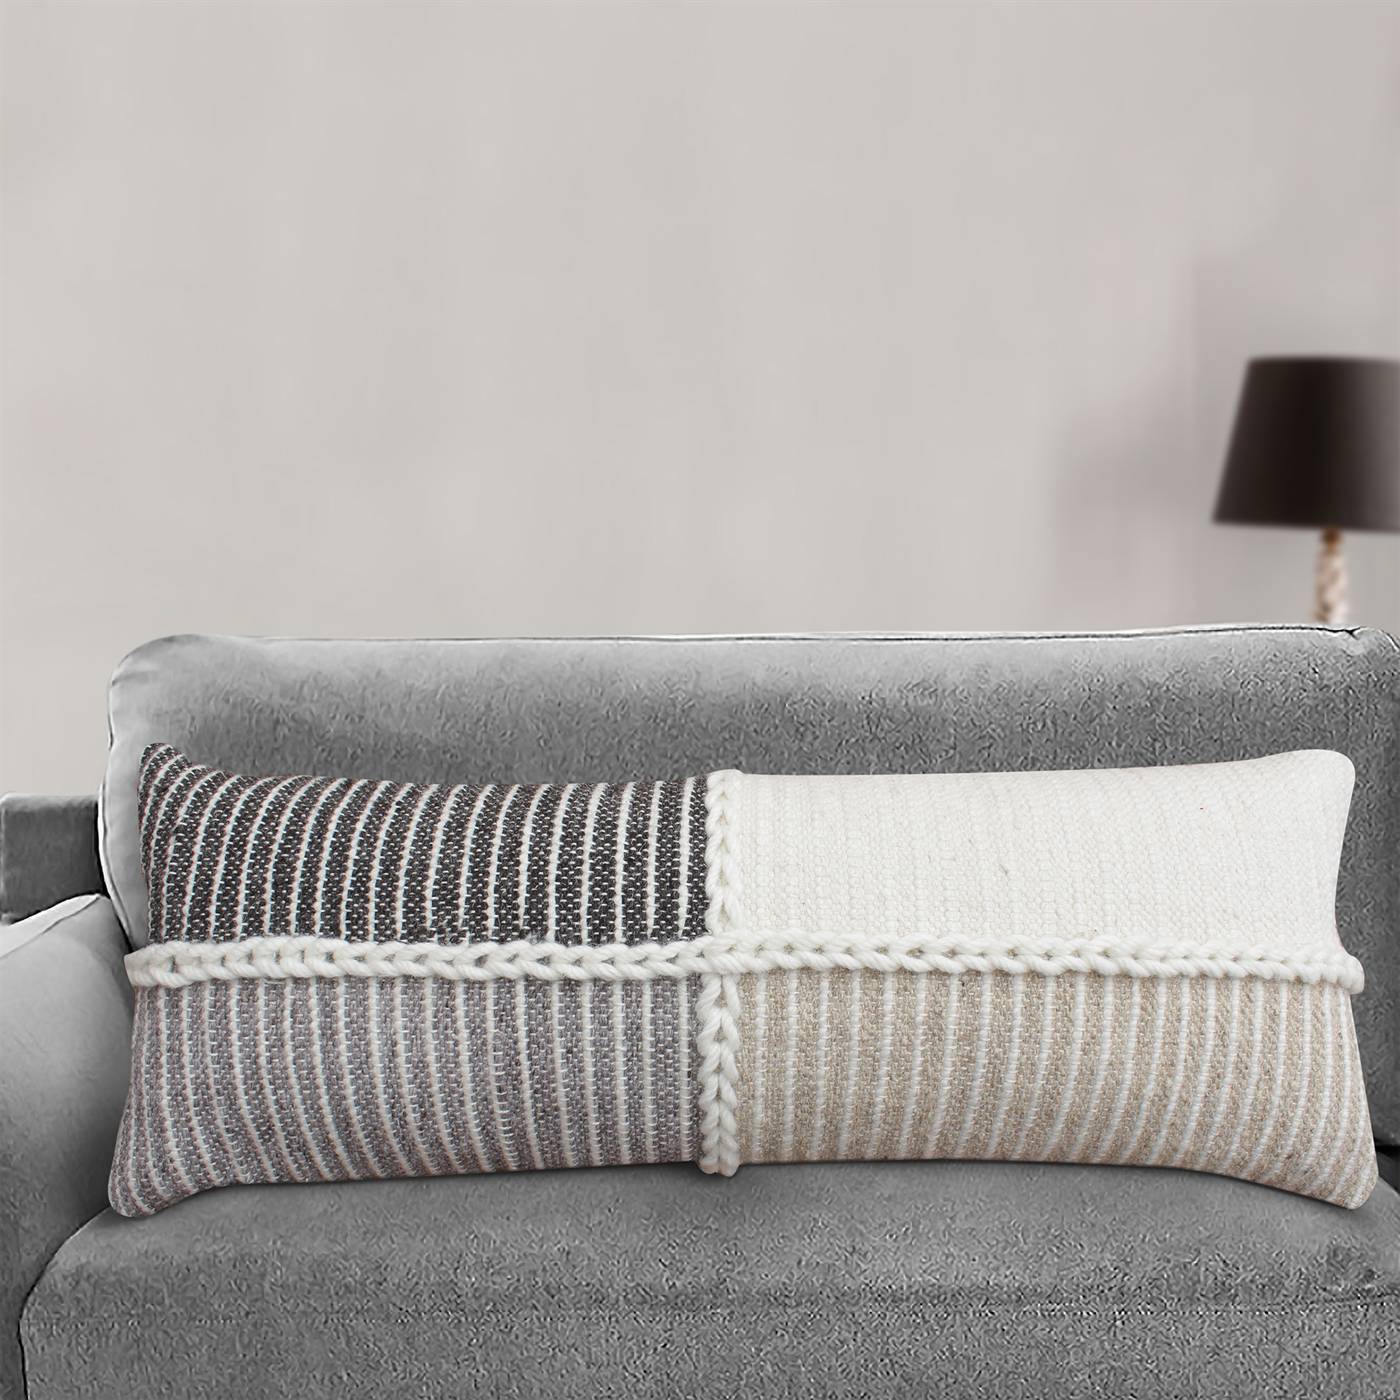 Atkinson Lumber Cushion, 36x91 cm, Natural White, Grey, Beige, Wool, Hand Woven, Pitloom, Flat Weave